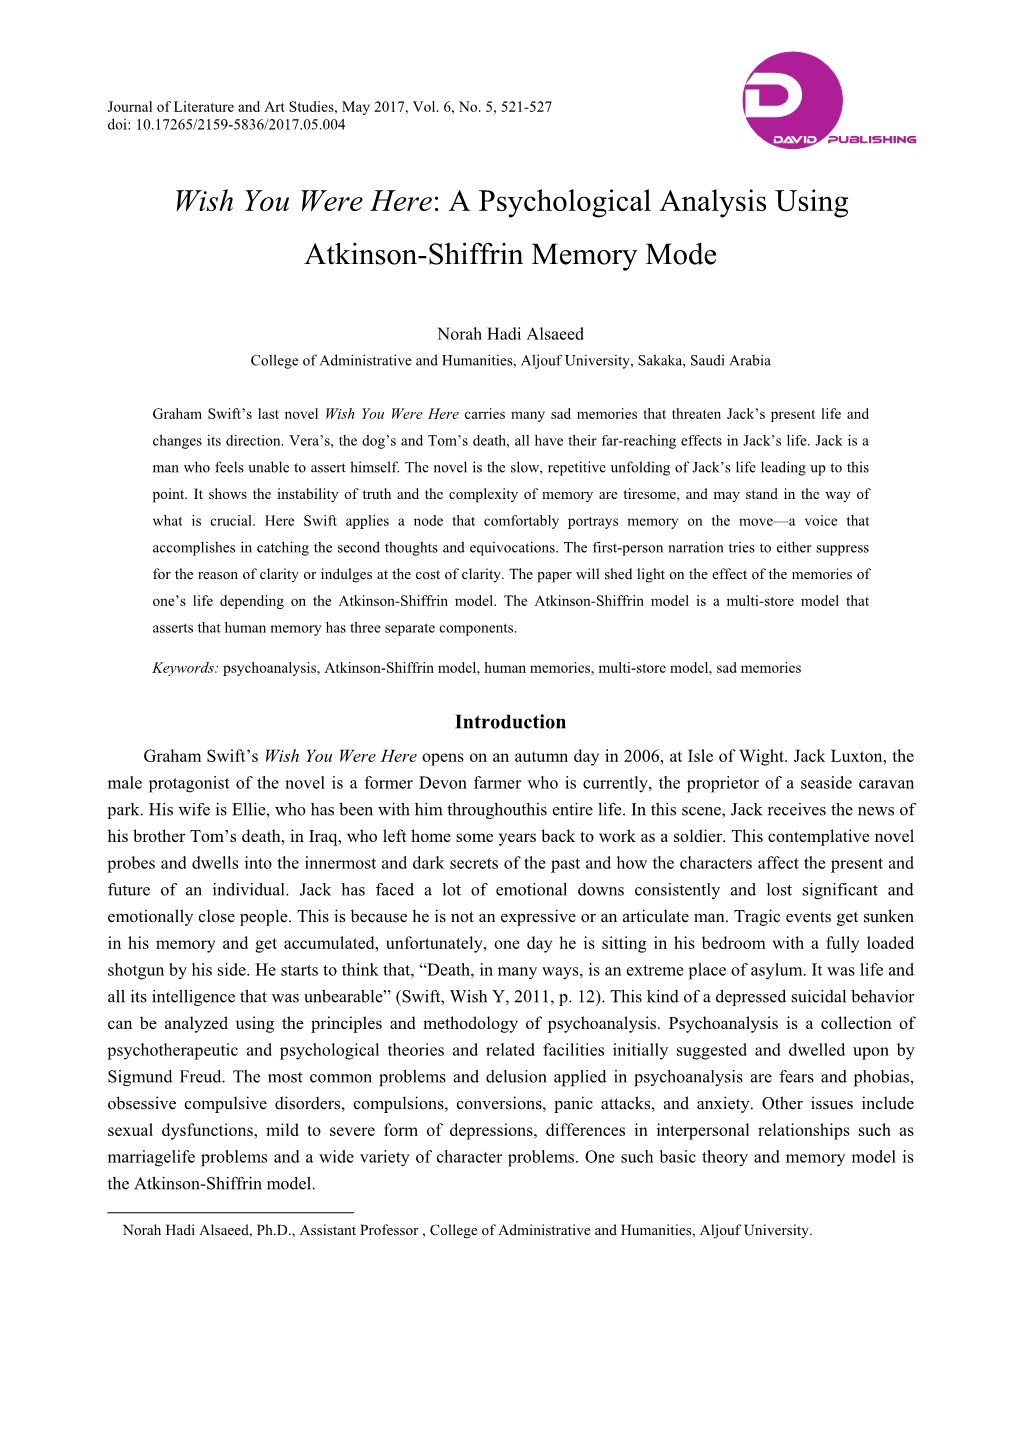 A Psychological Analysis Using Atkinson-Shiffrin Memory Mode